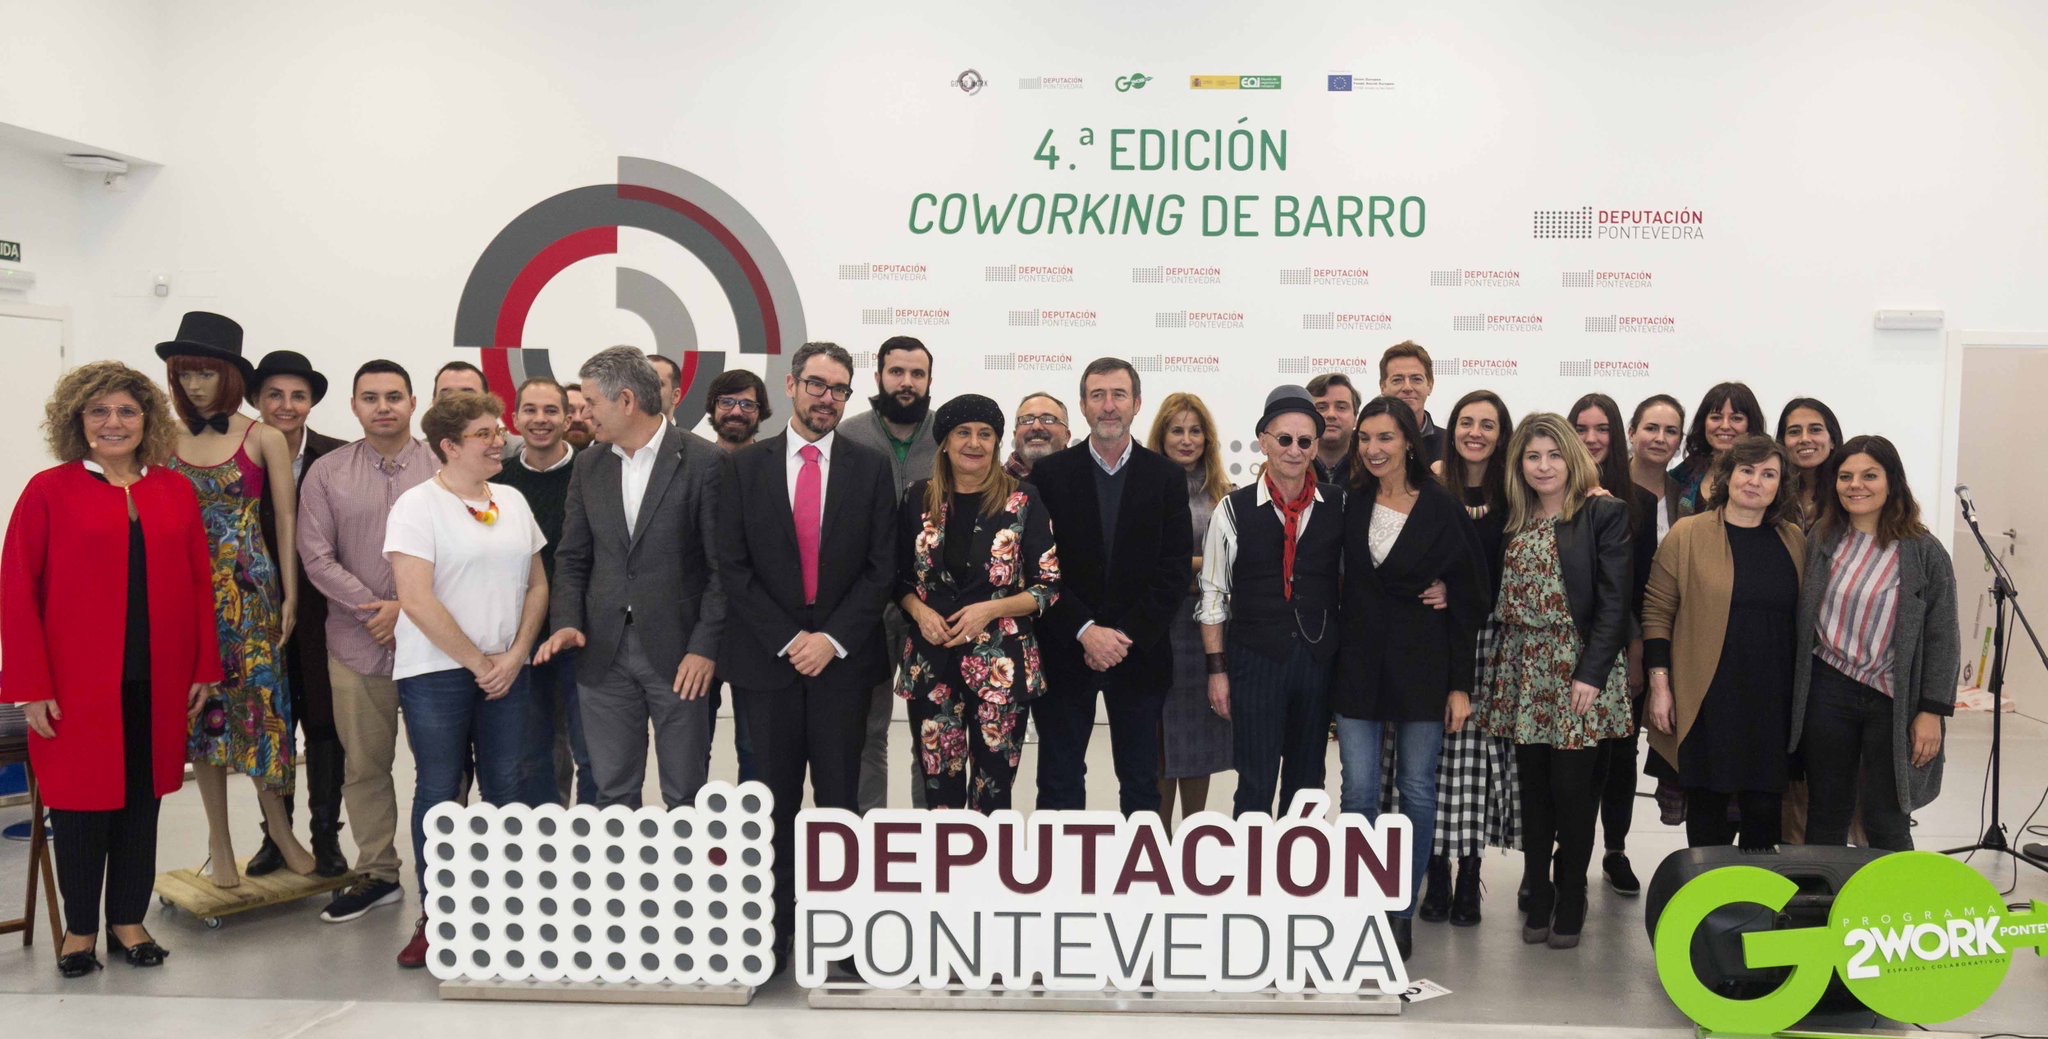 Coworking EOI - Deputacion Pontevedra - Barro-Meis-4ª Edicion